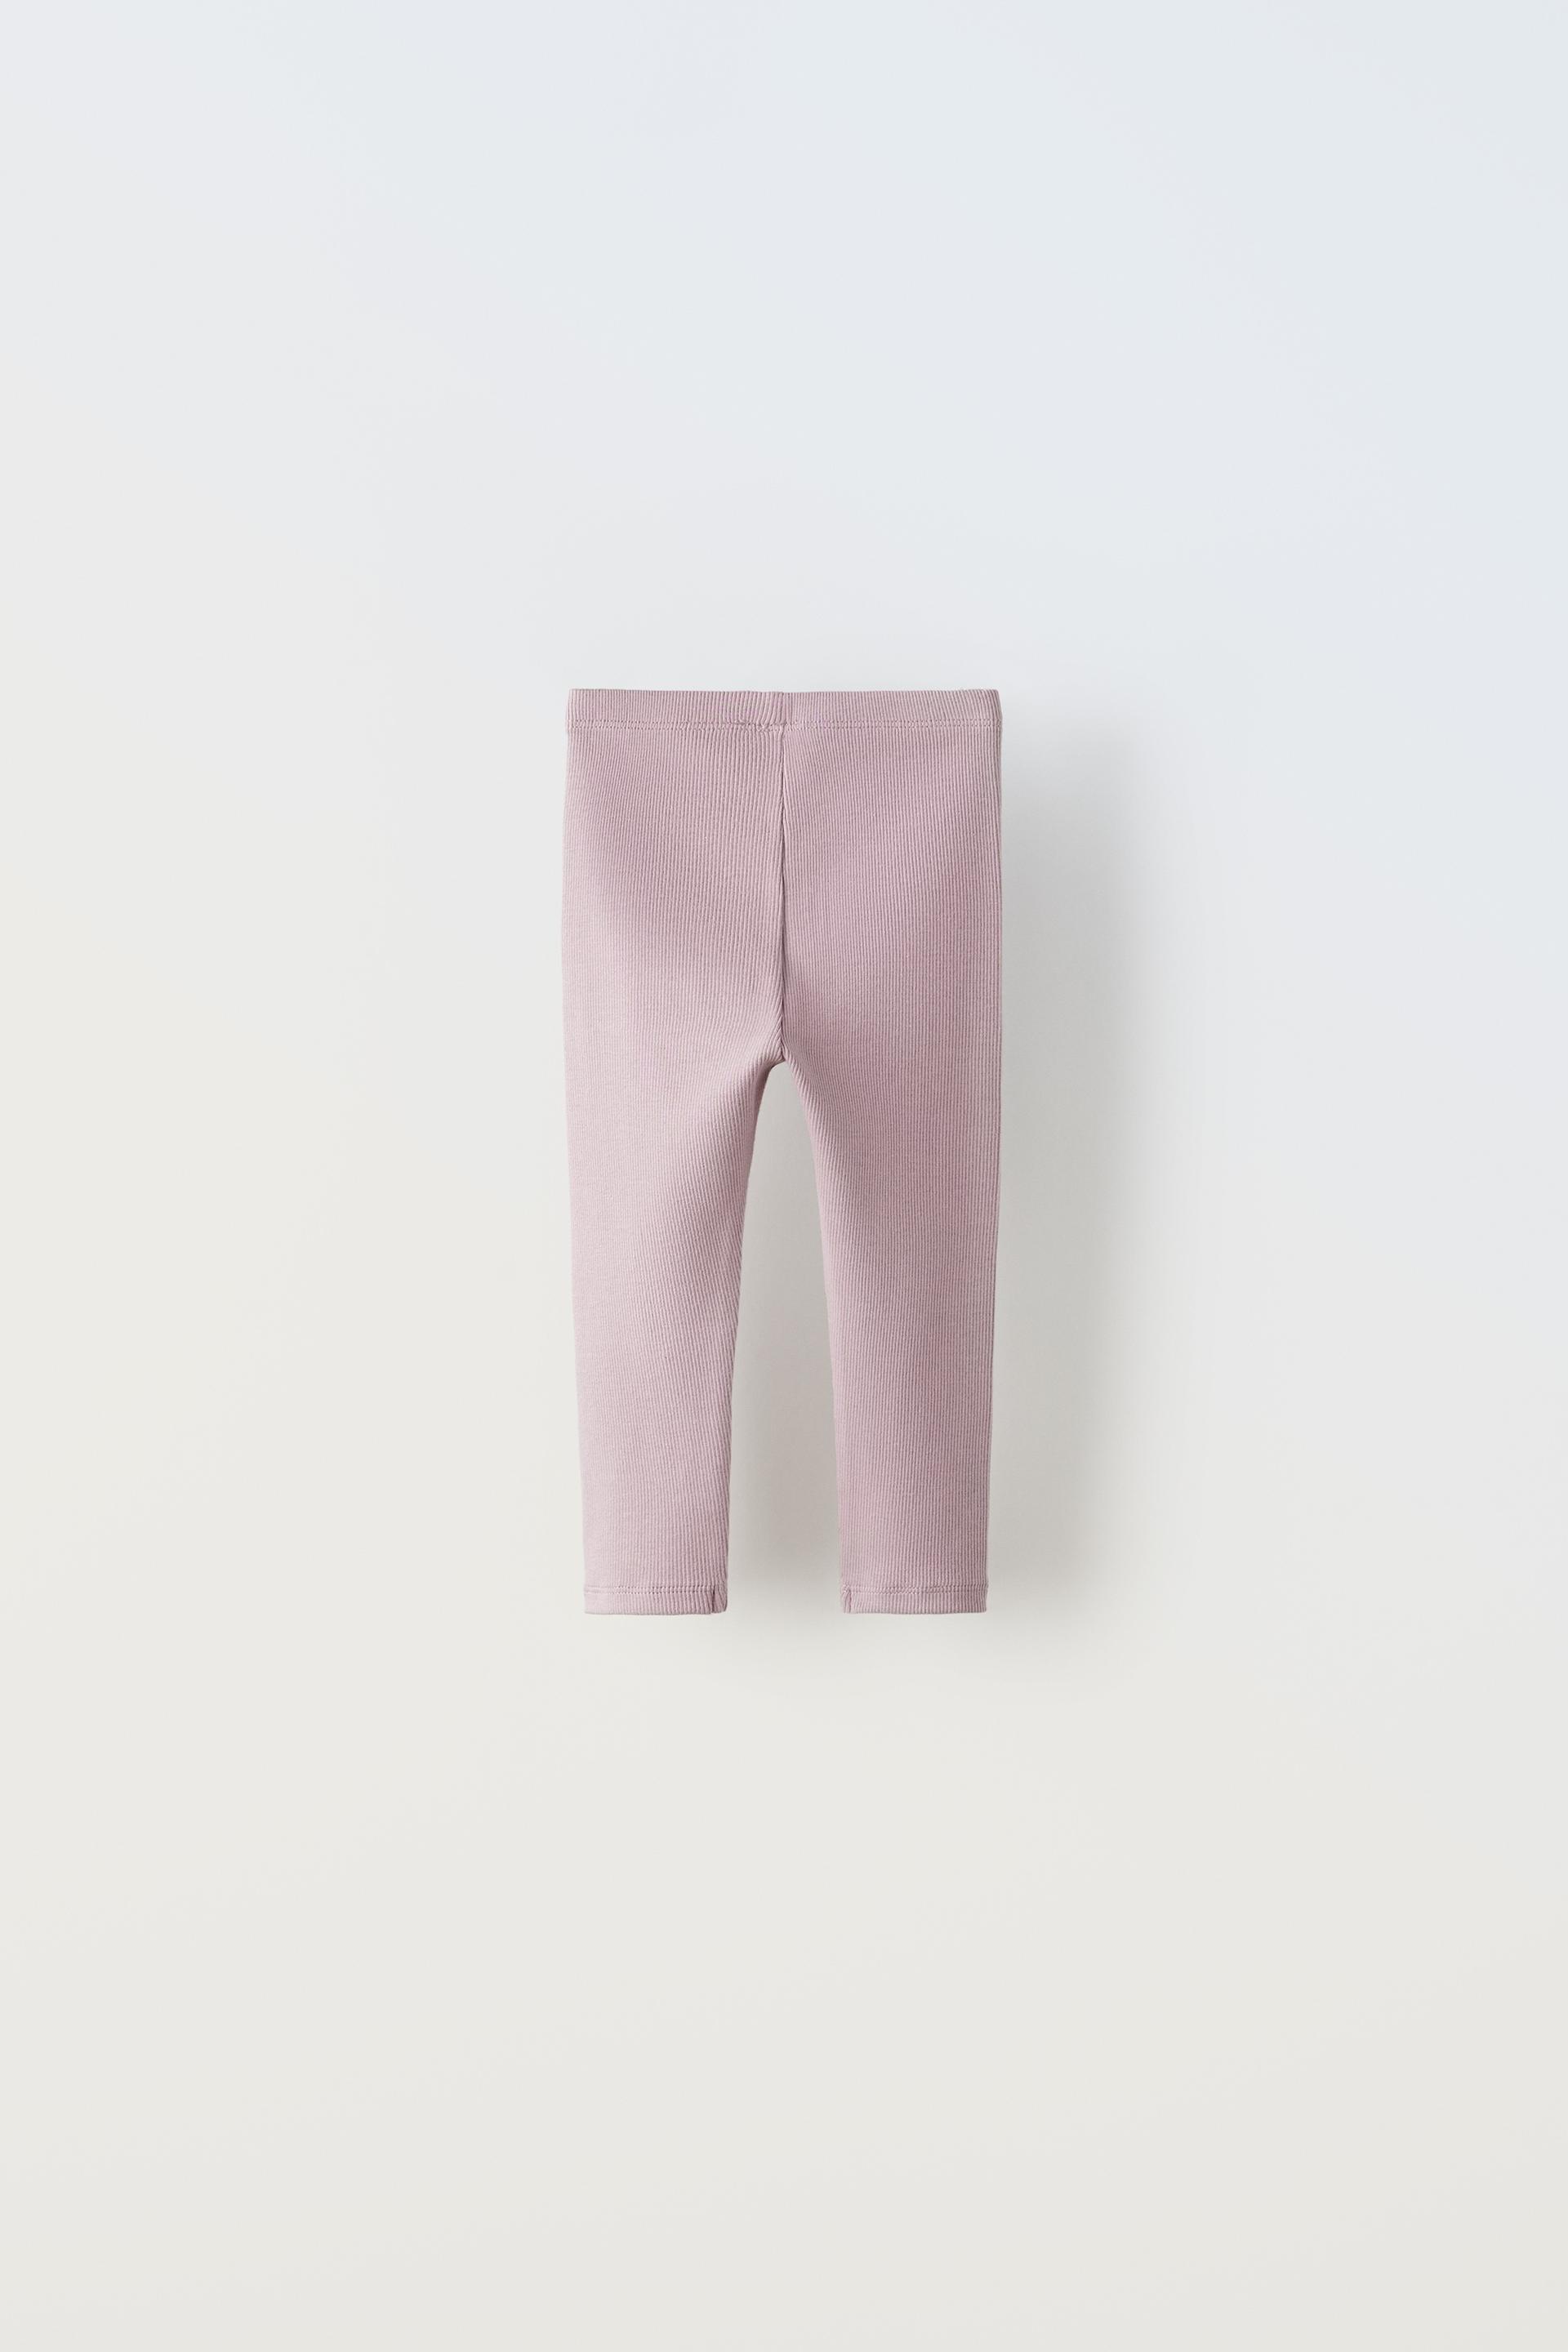 Zara, Pants & Jumpsuits, Euc Zara Ribbed Leggings